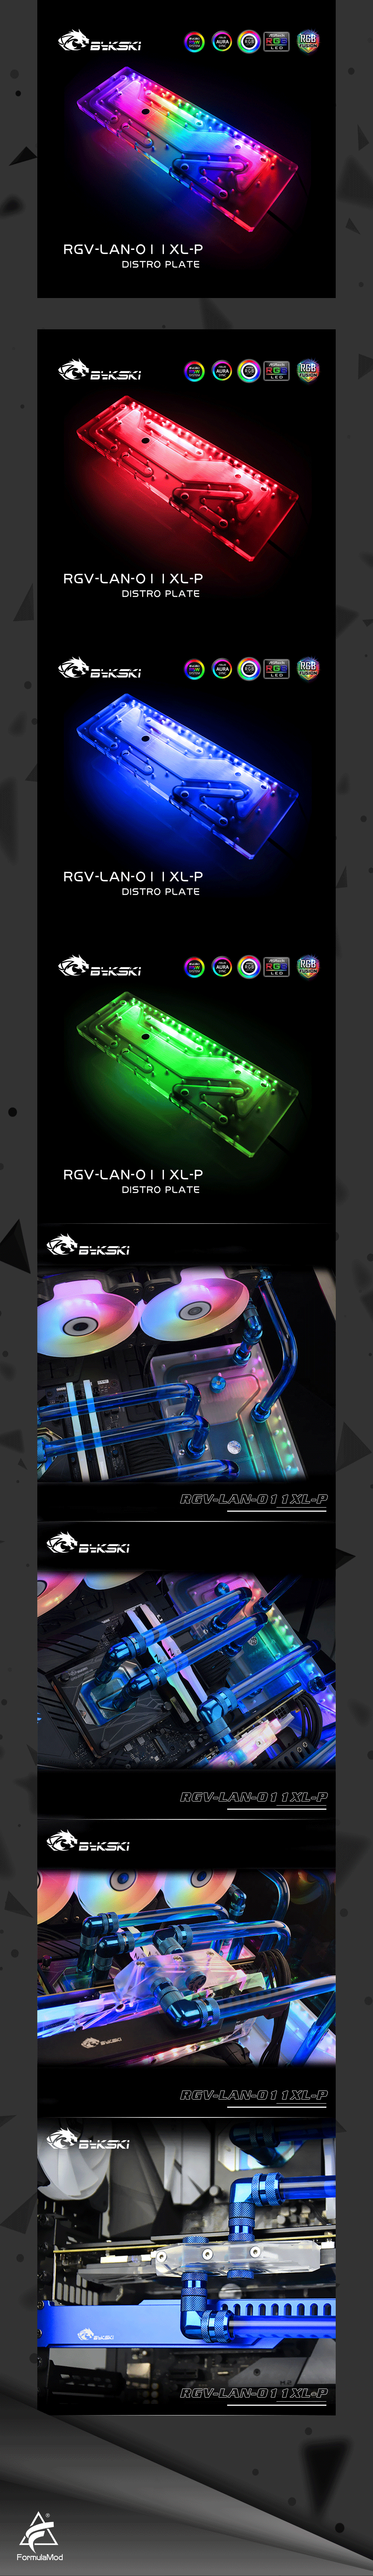 Bykski Distro Plate Kit For Lian Li PC-O11 Dynamic XL Case, 5V A-RGB Complete Loop For Single GPU PC Building, Water Cooling Waterway Board, RGV-LAN-O11XL-P  